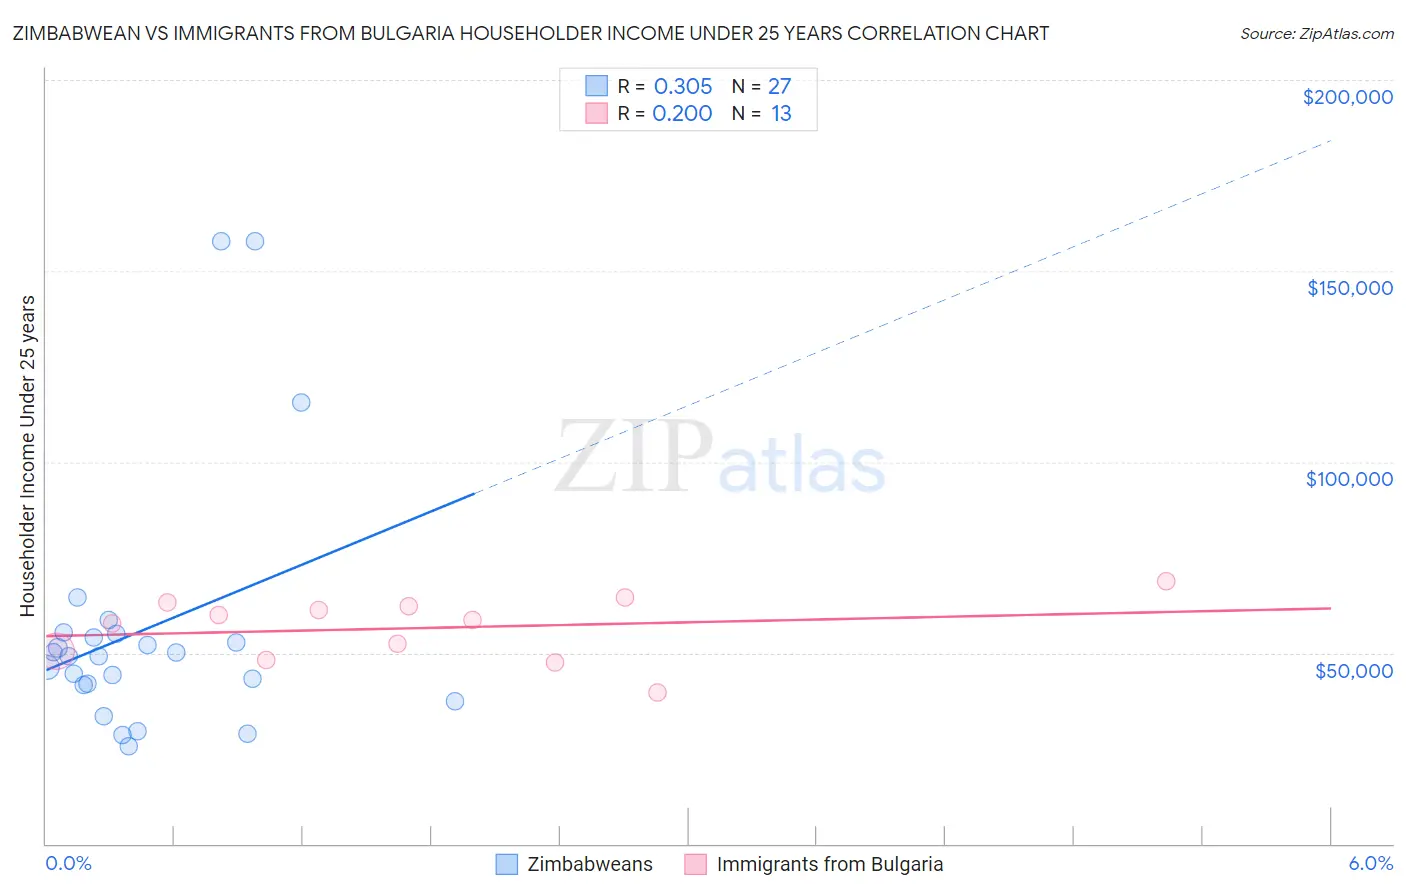 Zimbabwean vs Immigrants from Bulgaria Householder Income Under 25 years